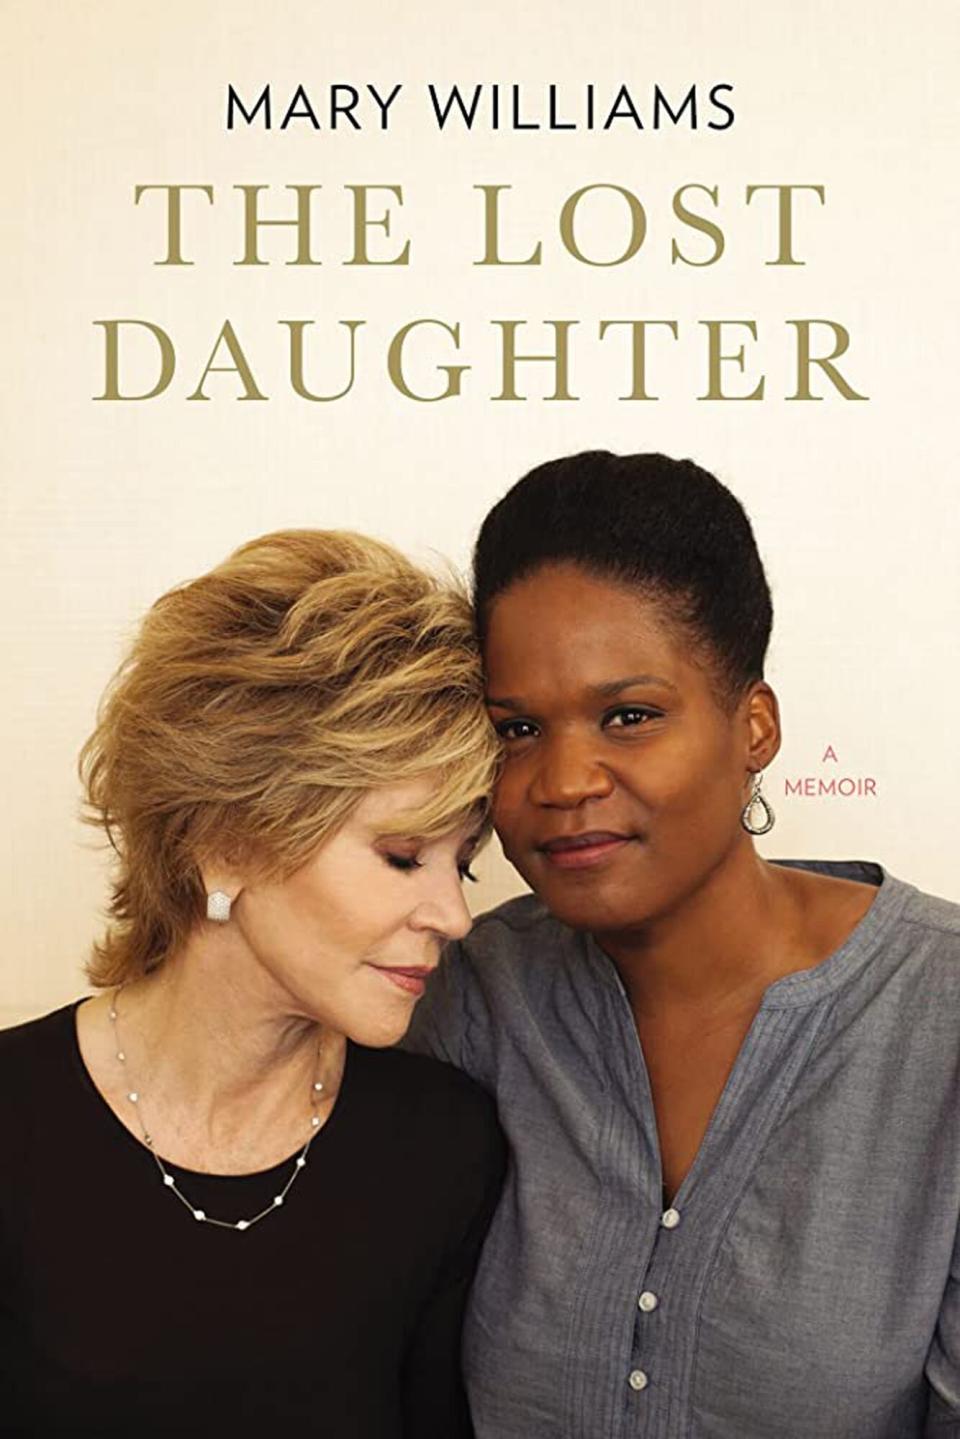 Mary Williams memoir cover - Mary Williams and Jane Fonda